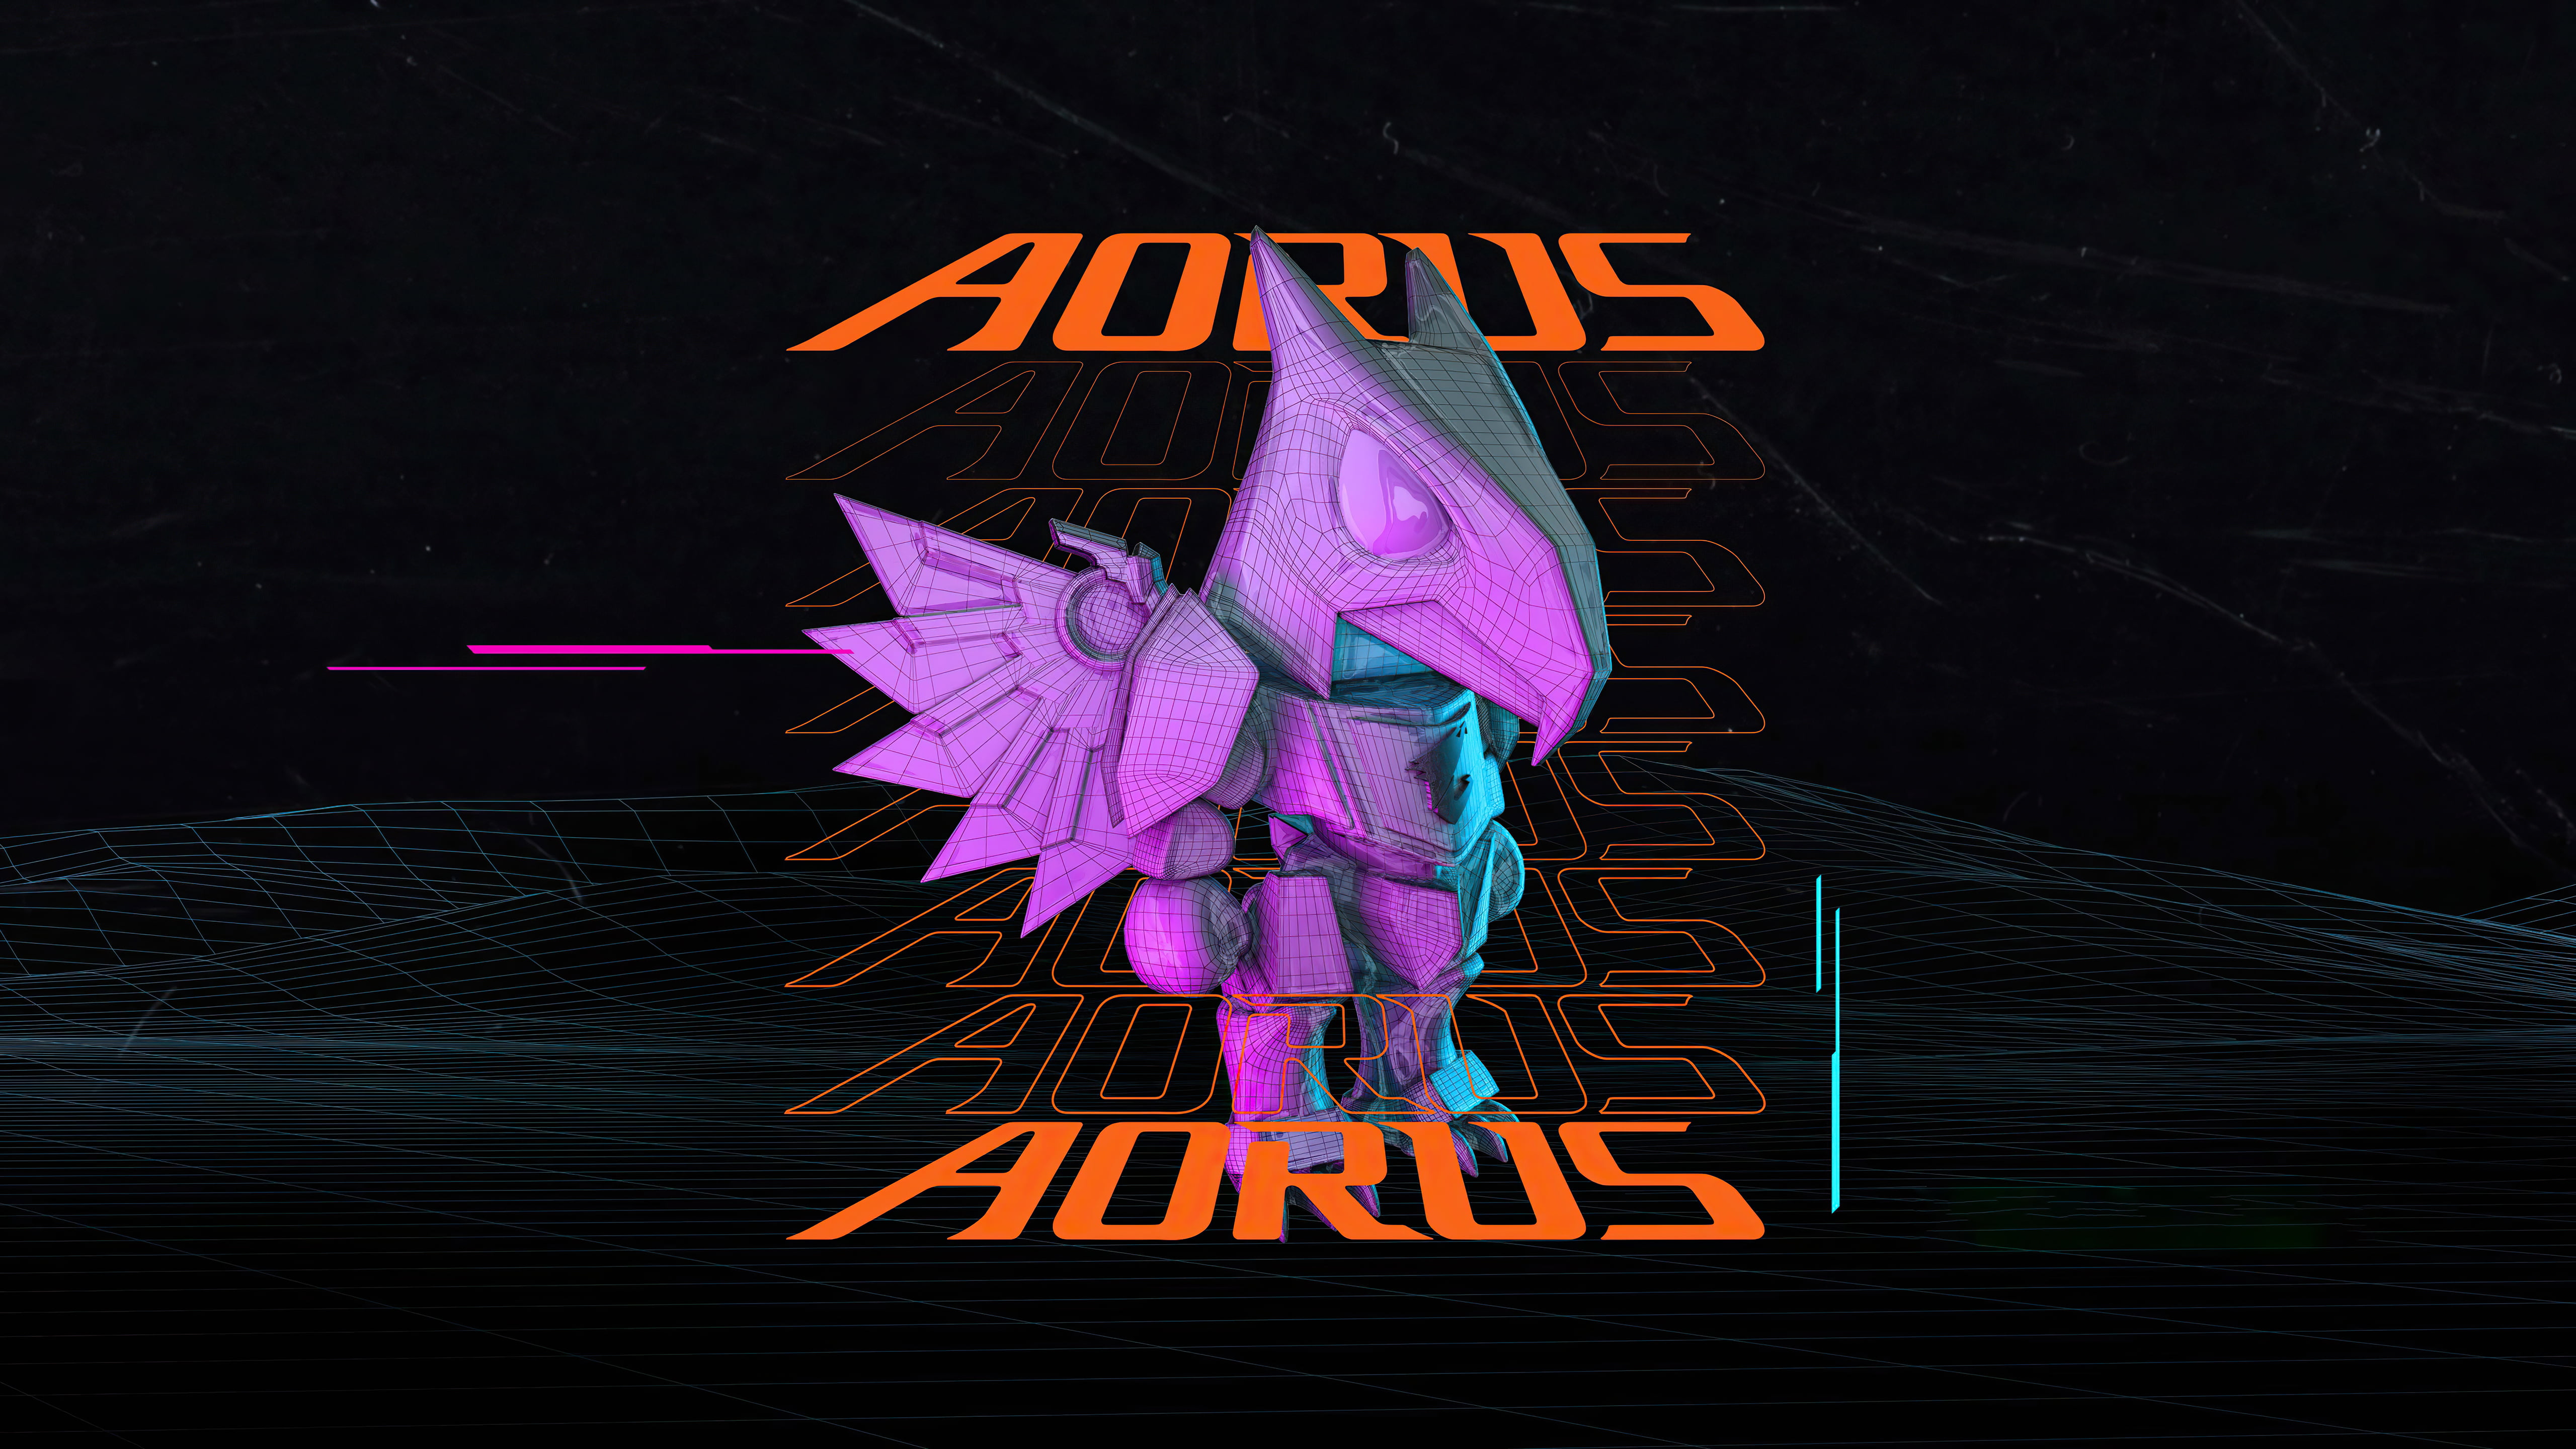 Aorus, CGI, simple background, text